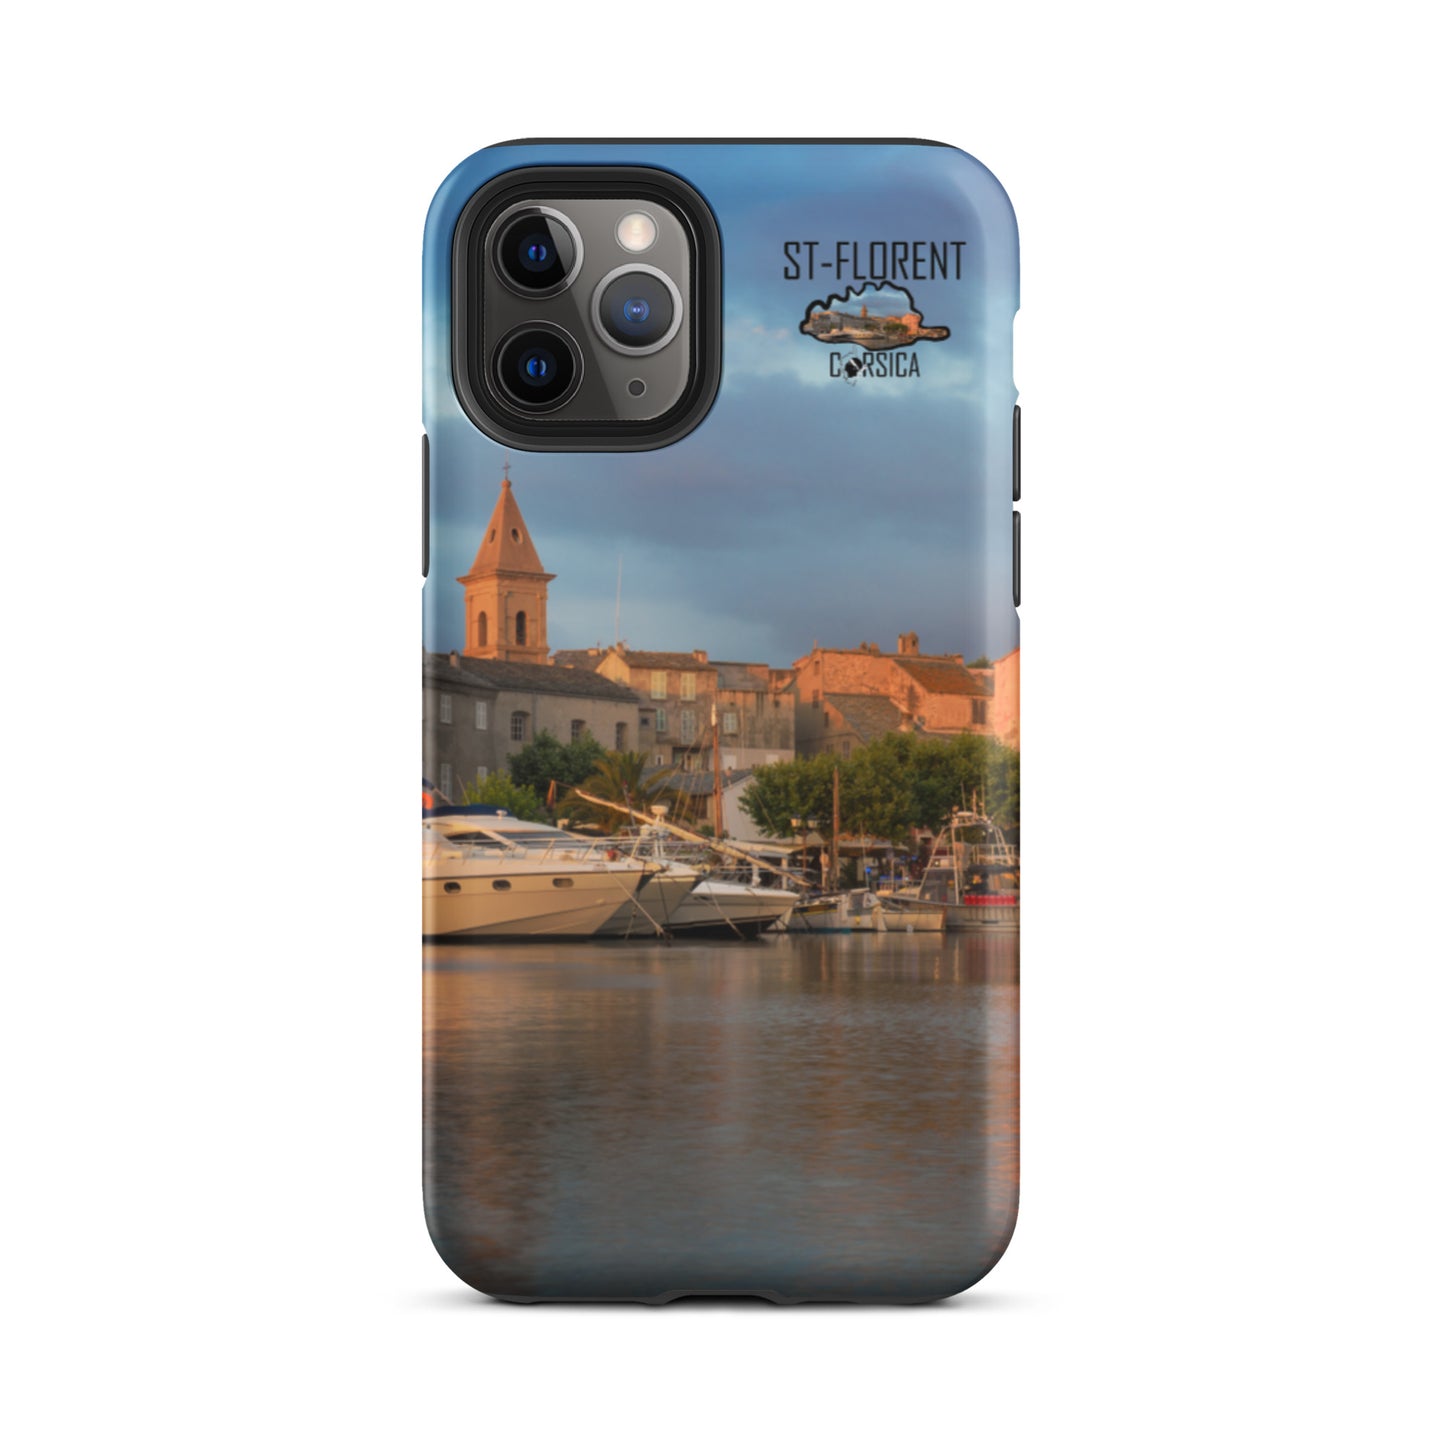 Coque d'iPhone rigide St-Florent Corsica